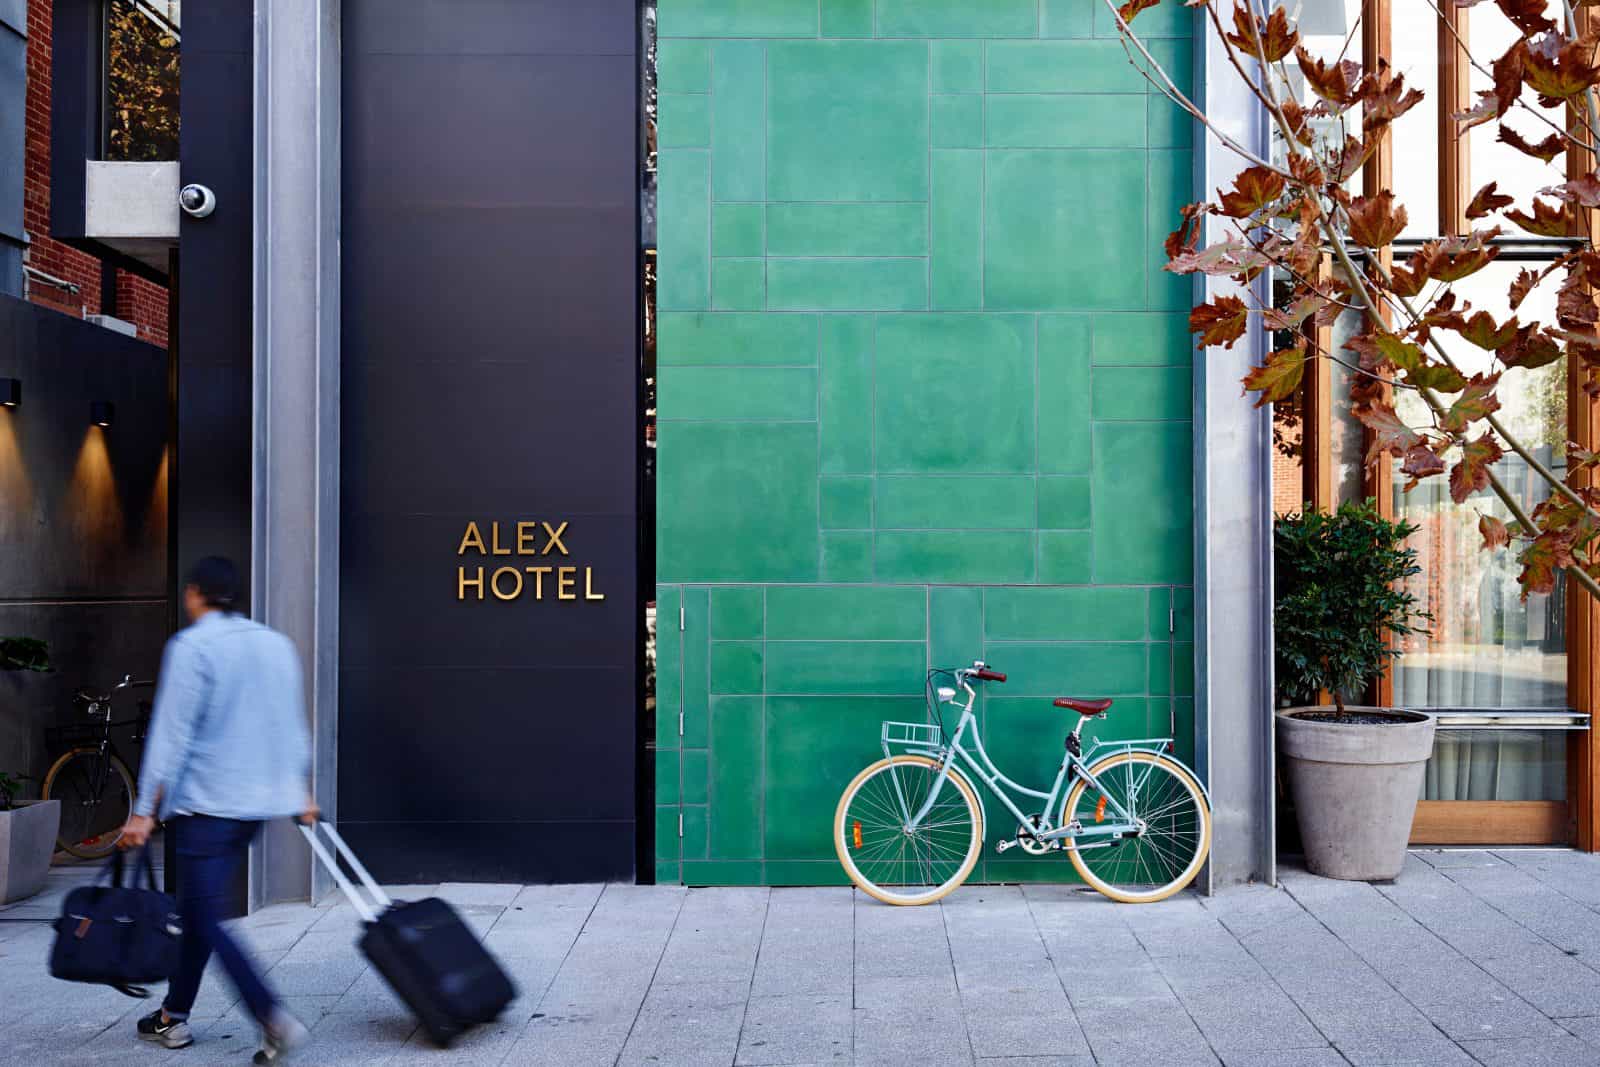 Alex Hotel, Perth, Western Australia